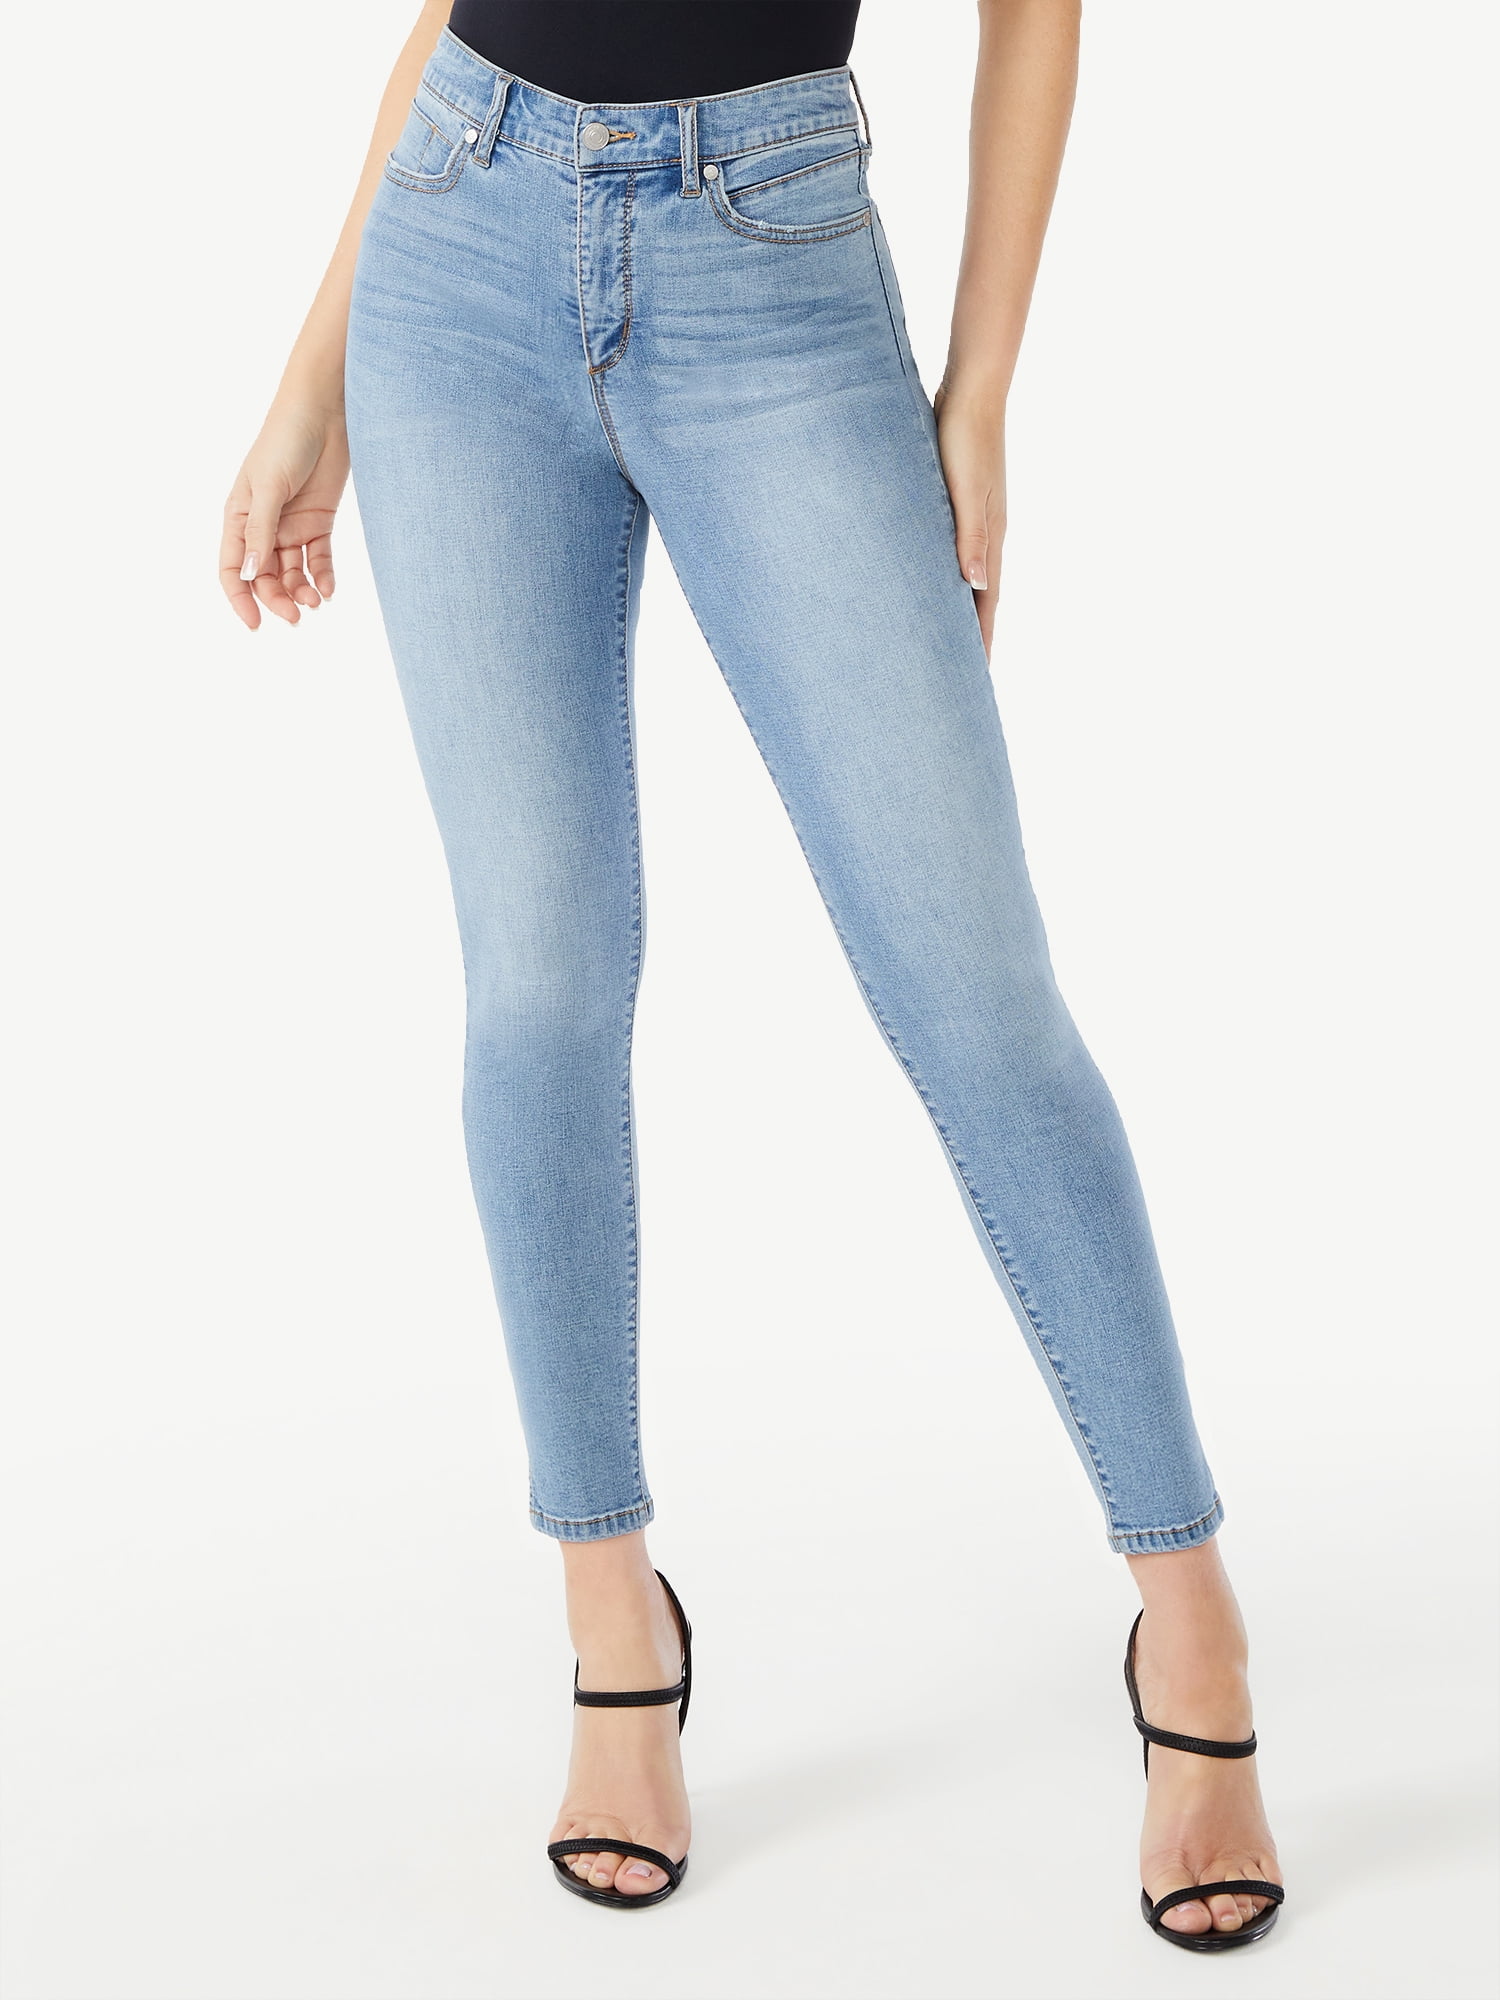 Sofia Jeans Women's Rosa Curvy High Rise Side Slit Hem Skinny Jeans ...